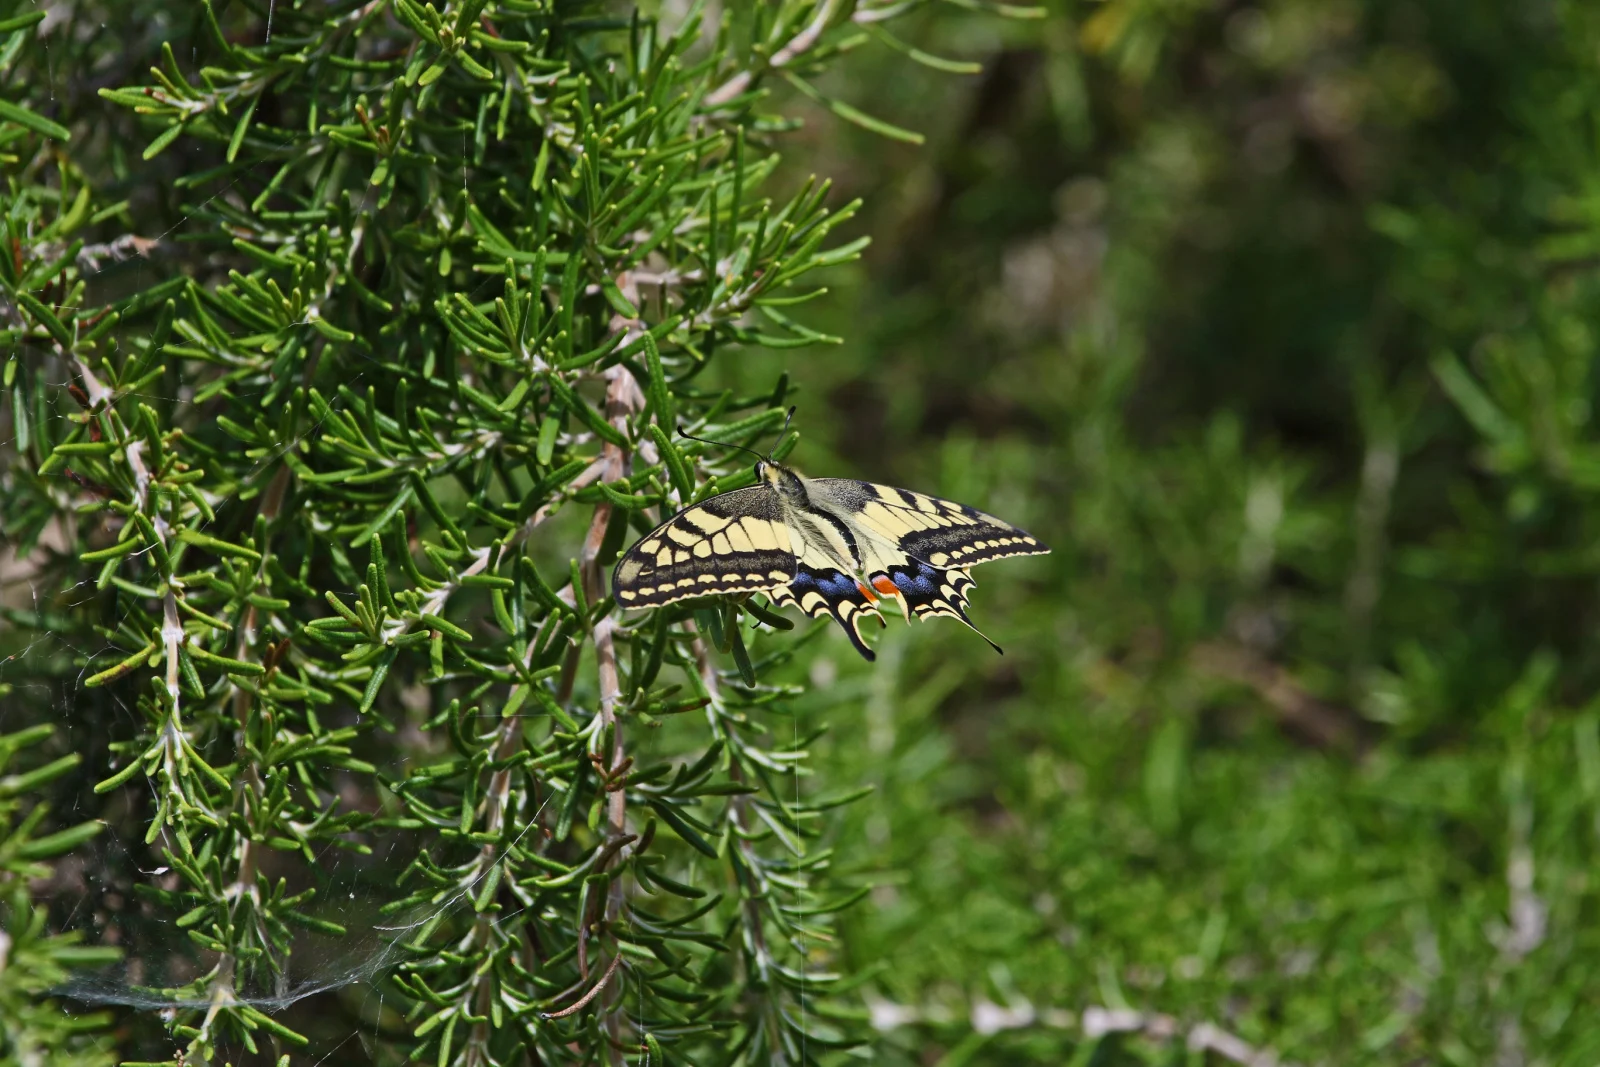 Common swallowtail butterfly Latin papilio machaon feeding on a prostrate rosemary bush Latin rosmarinus officinalis prostratus